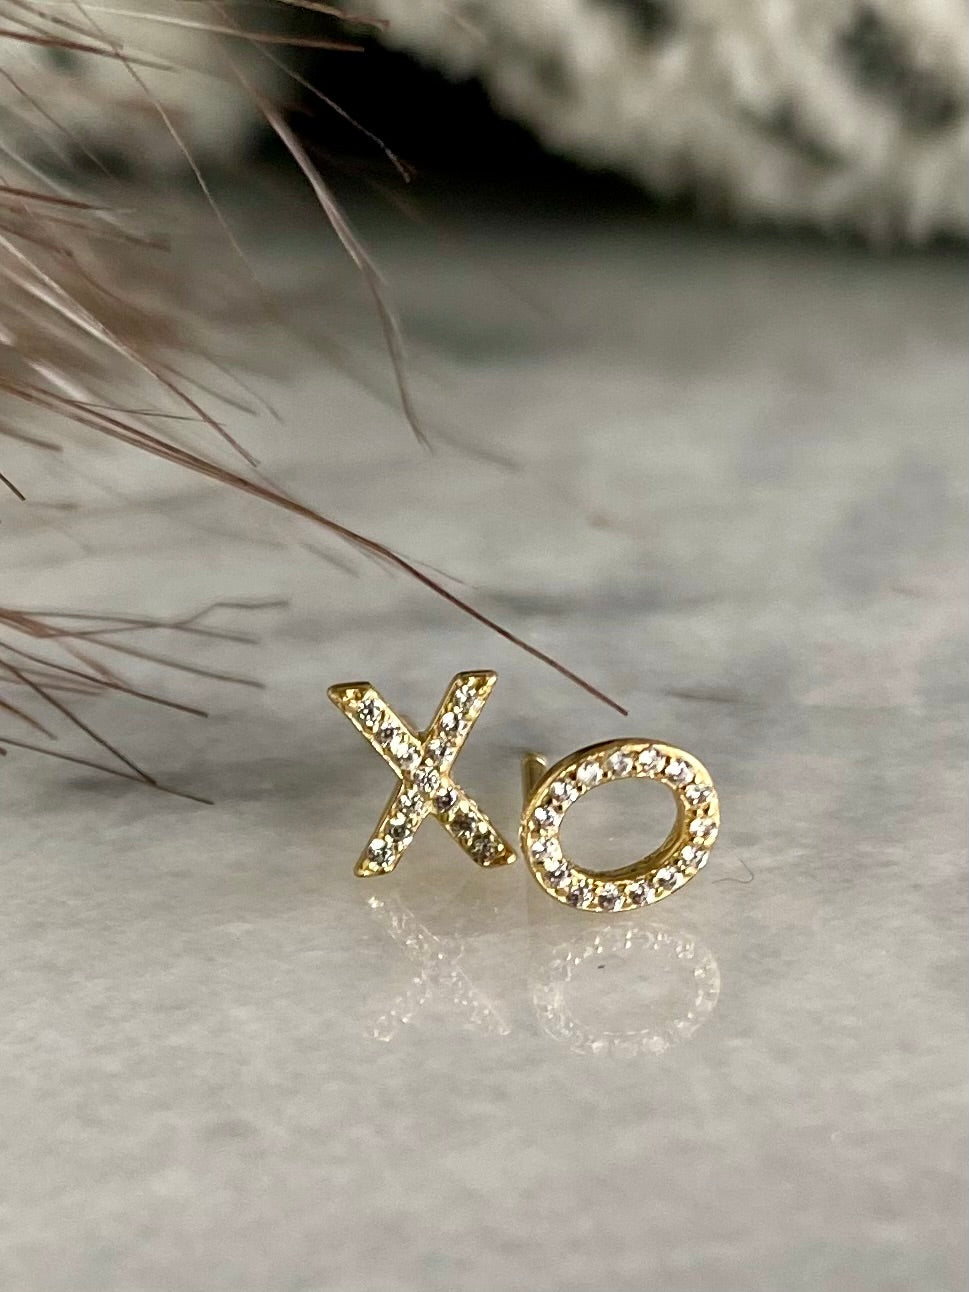 X and O earrings